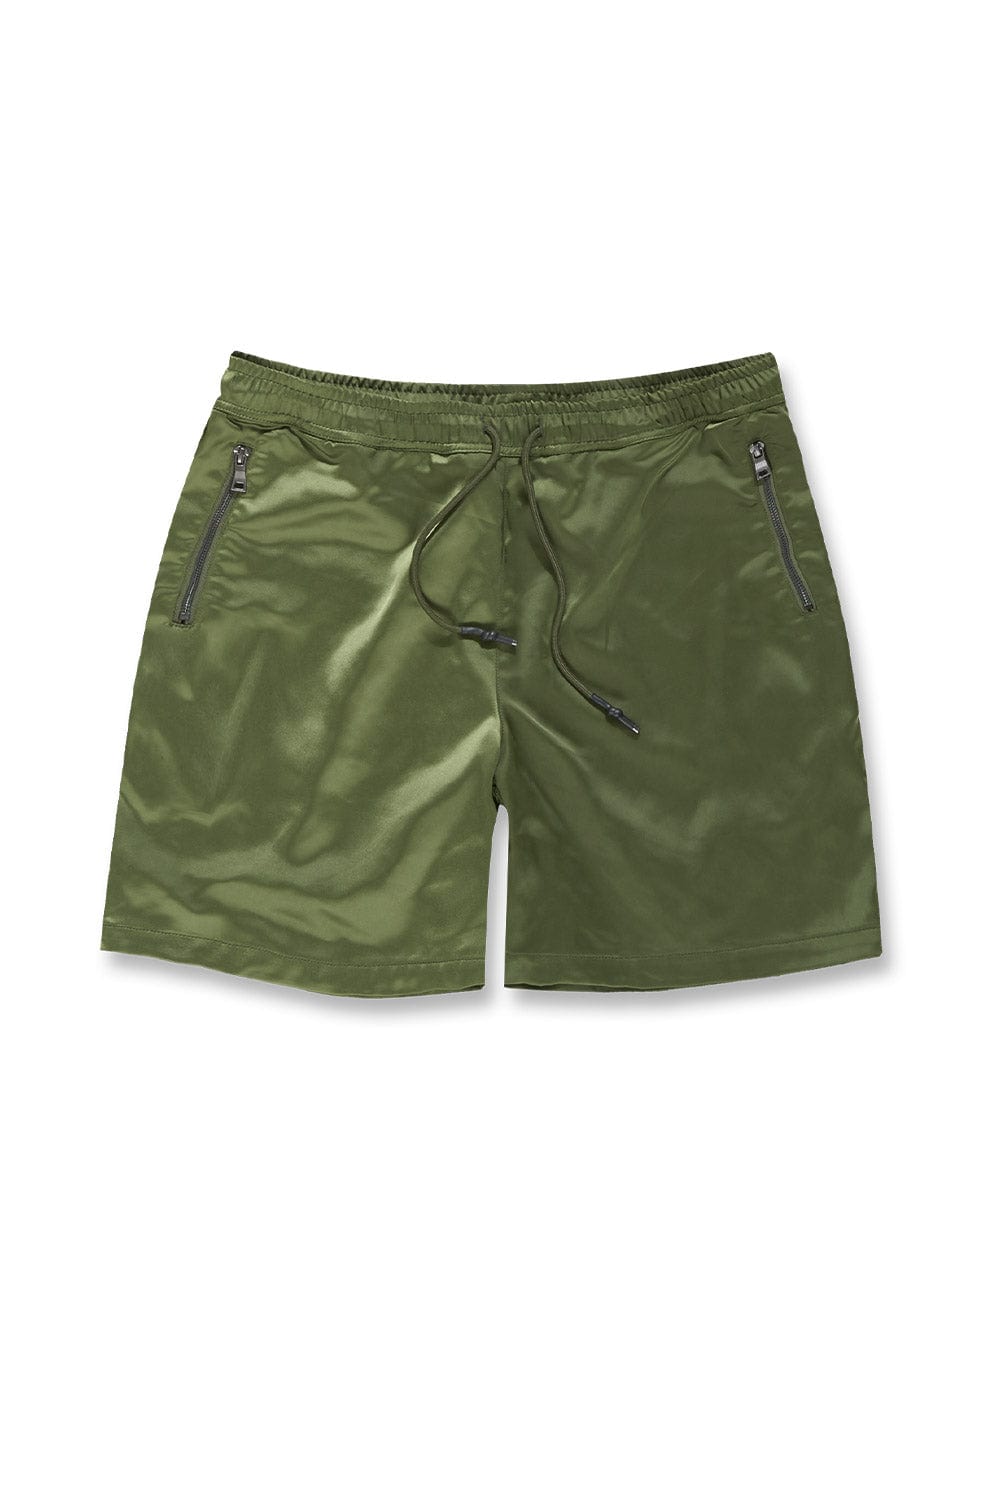 Jordan Craig Athletic - Lux Shorts Army Green / S